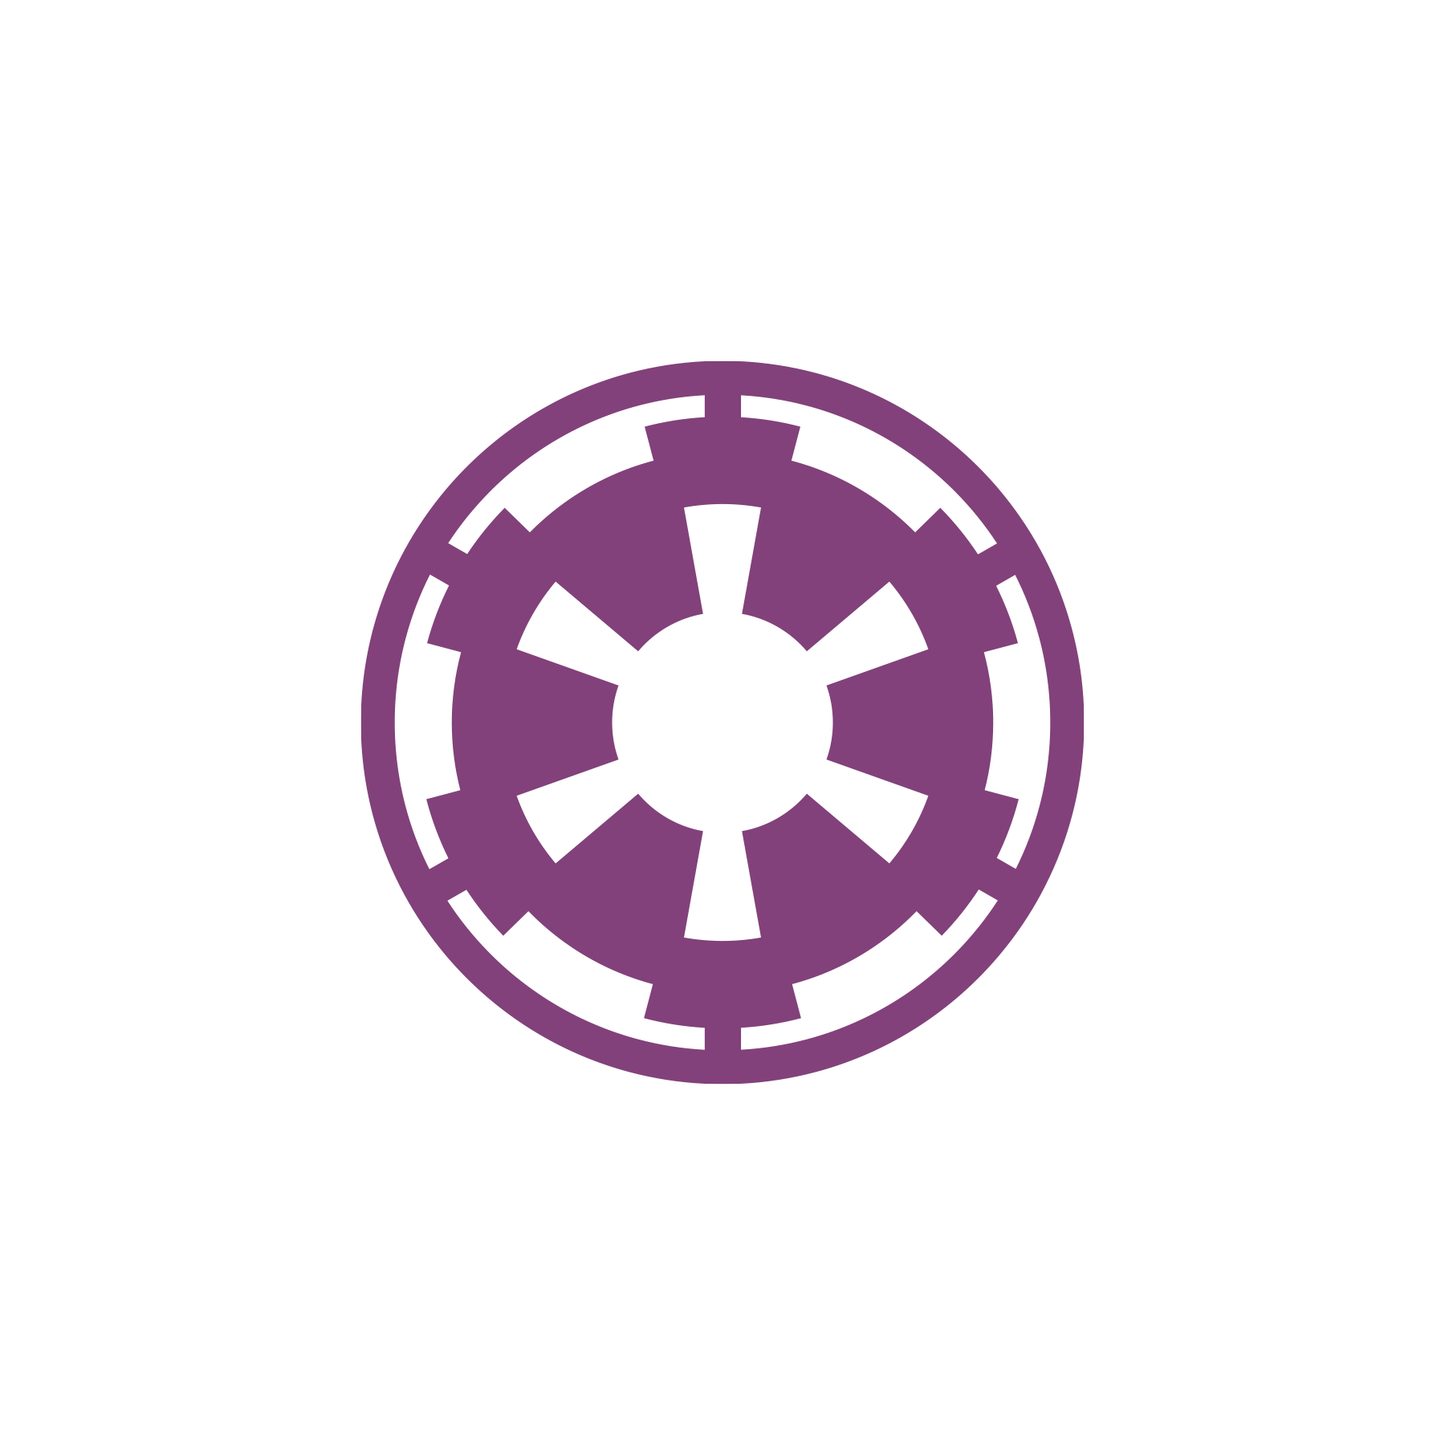 Star Wars Galactic Empire Symbol Logo